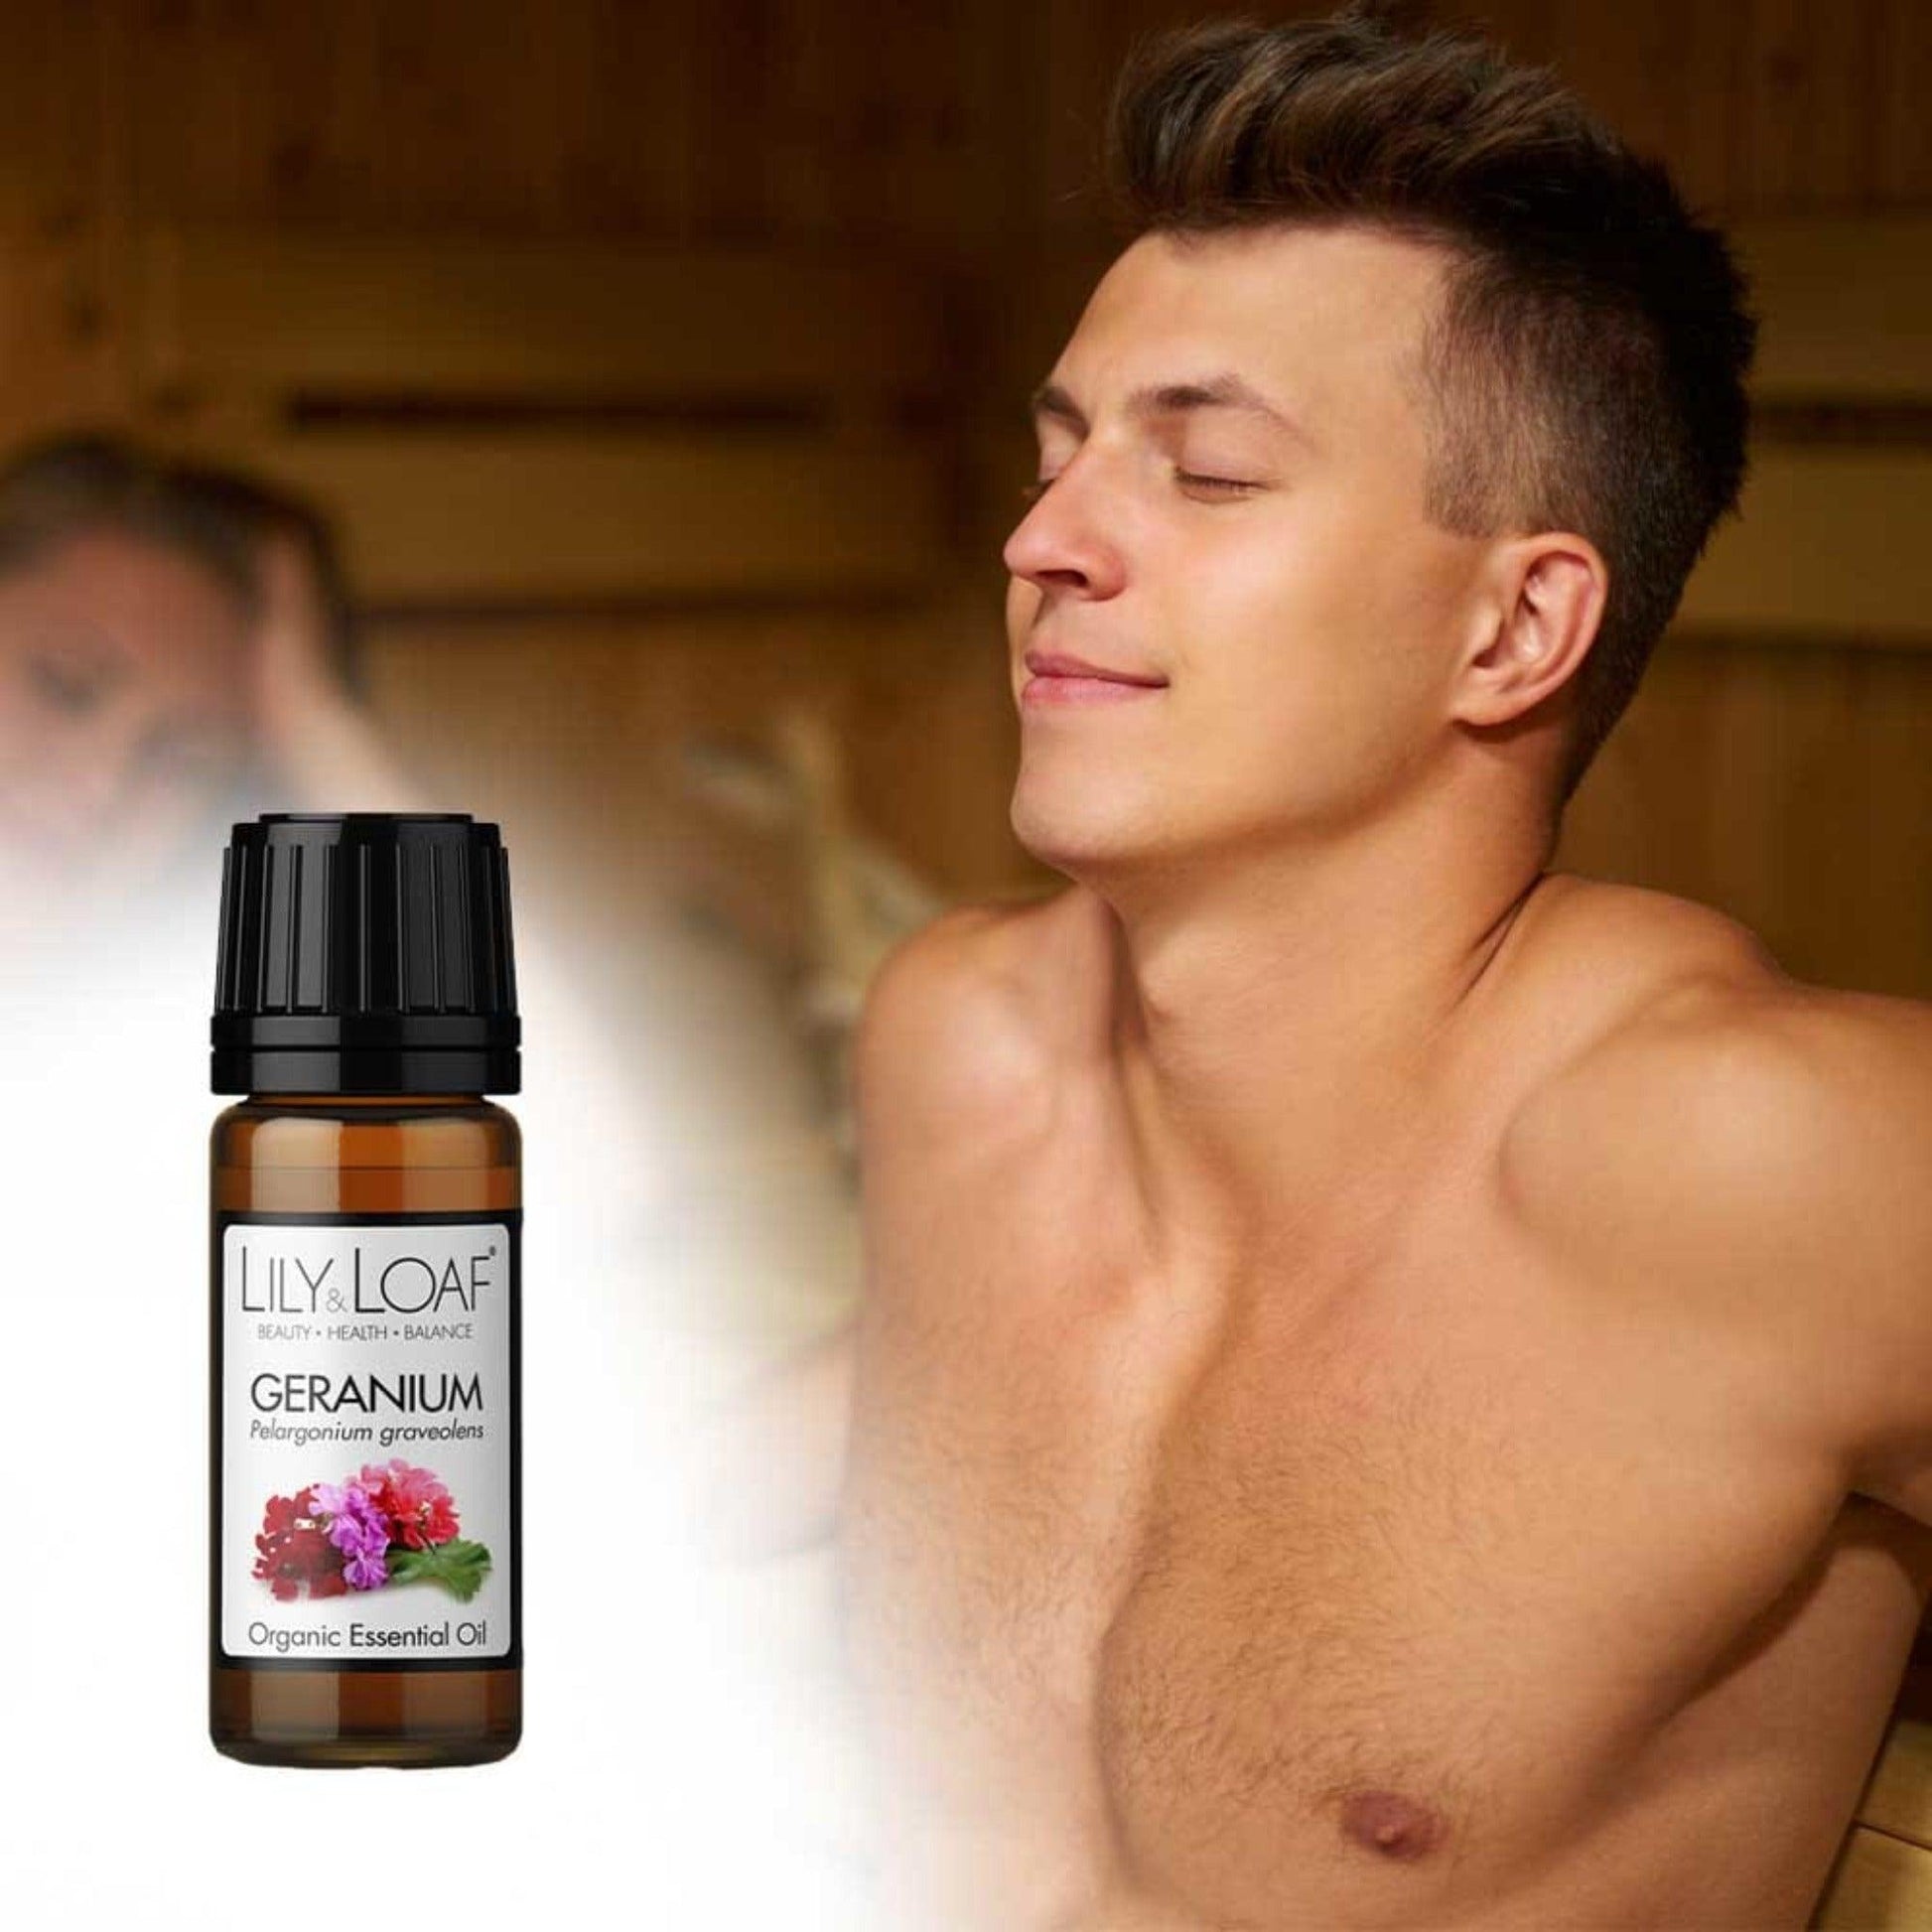 Geranium Organic Essential Oil male enjoying a sauna